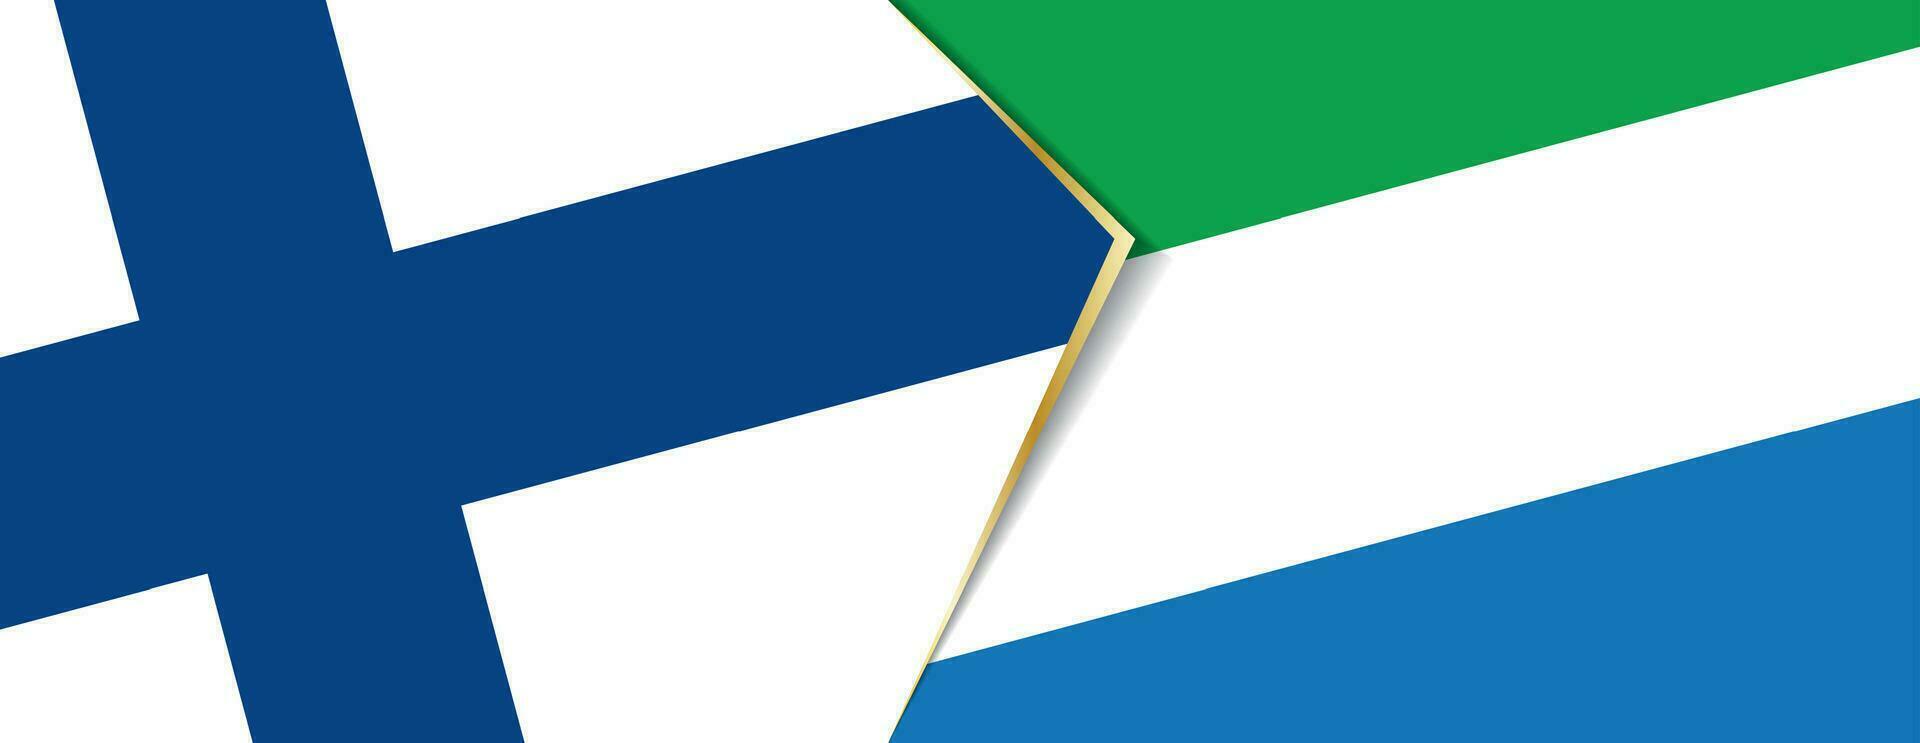 Finland en Sierra Leone vlaggen, twee vector vlaggen.